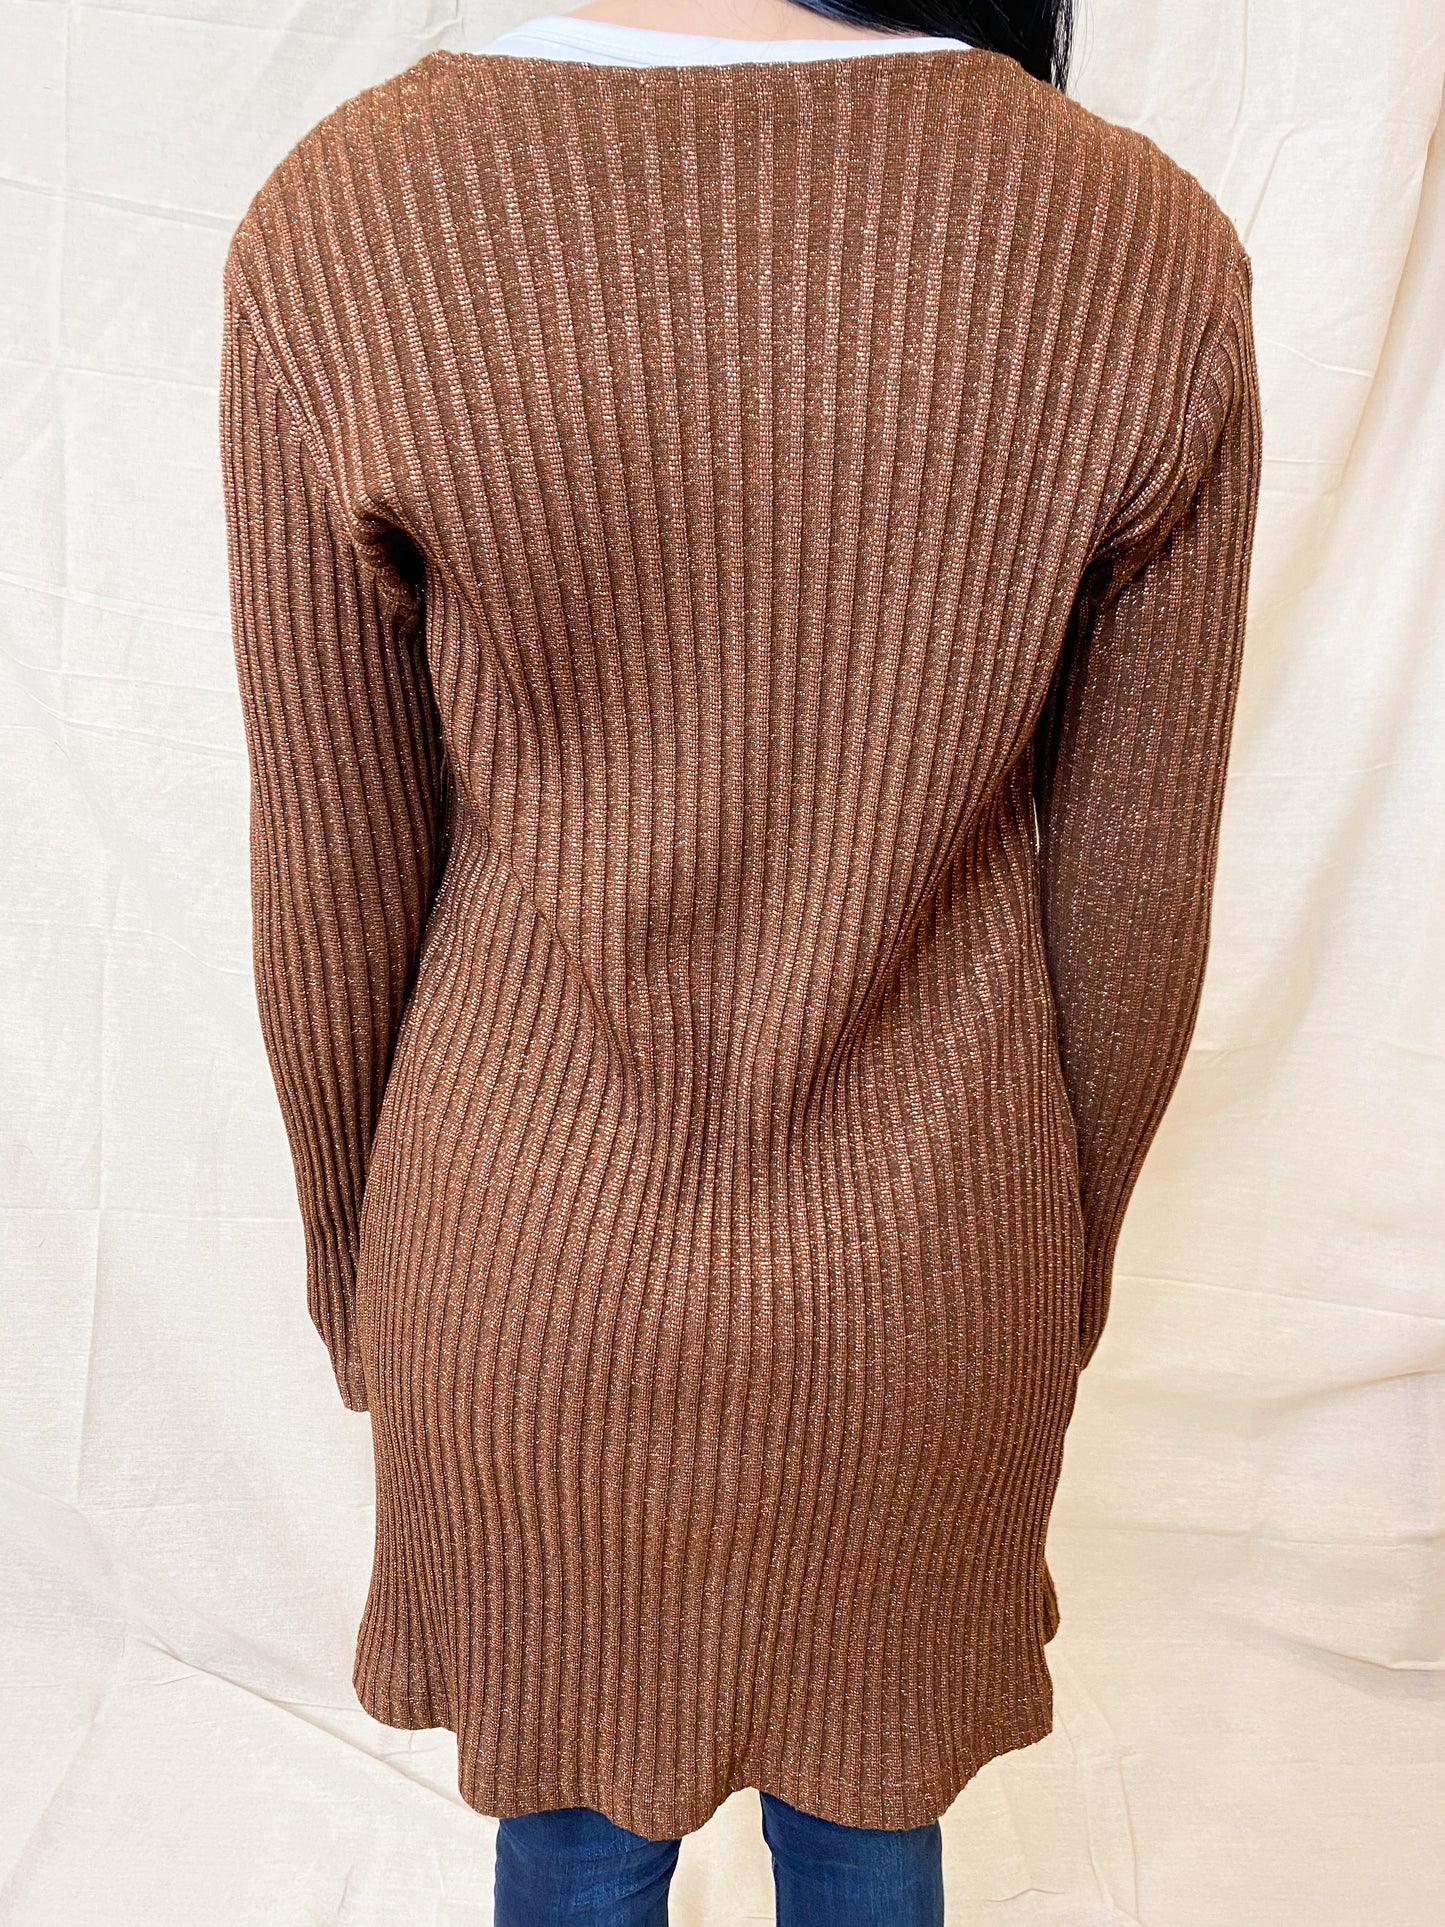 The Meg Duster Sweater, 1990's